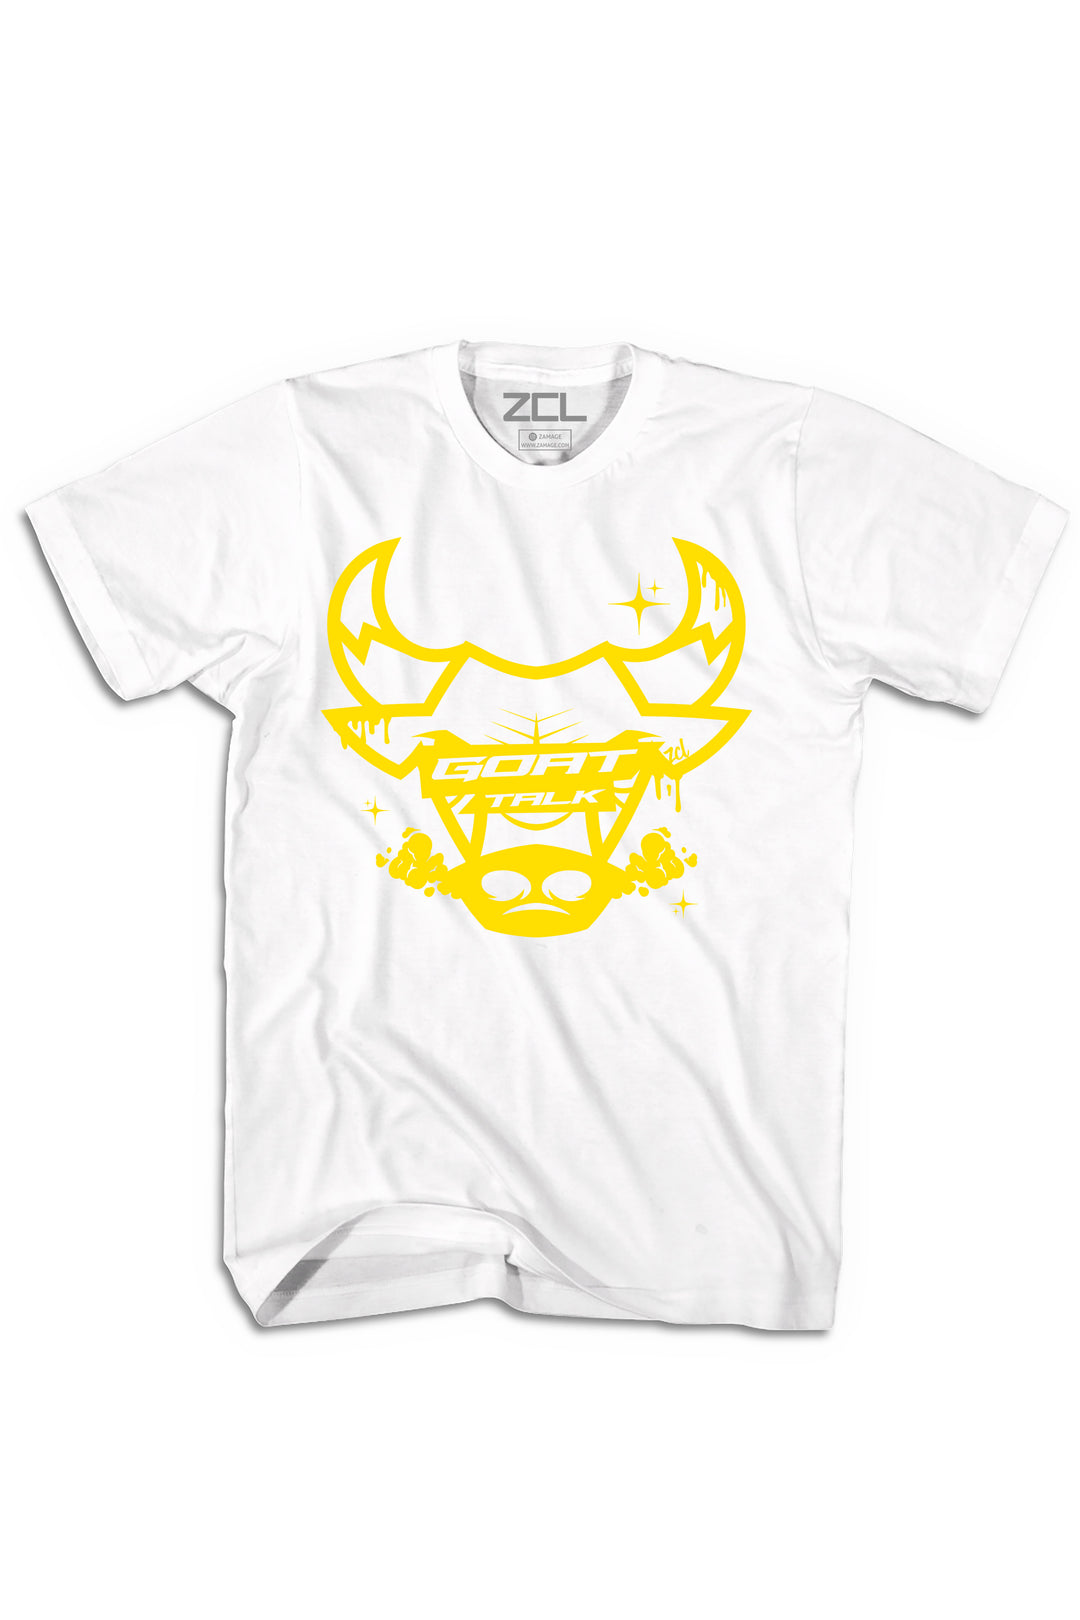 Goat Talk Tee (Yellow Logo) - Zamage